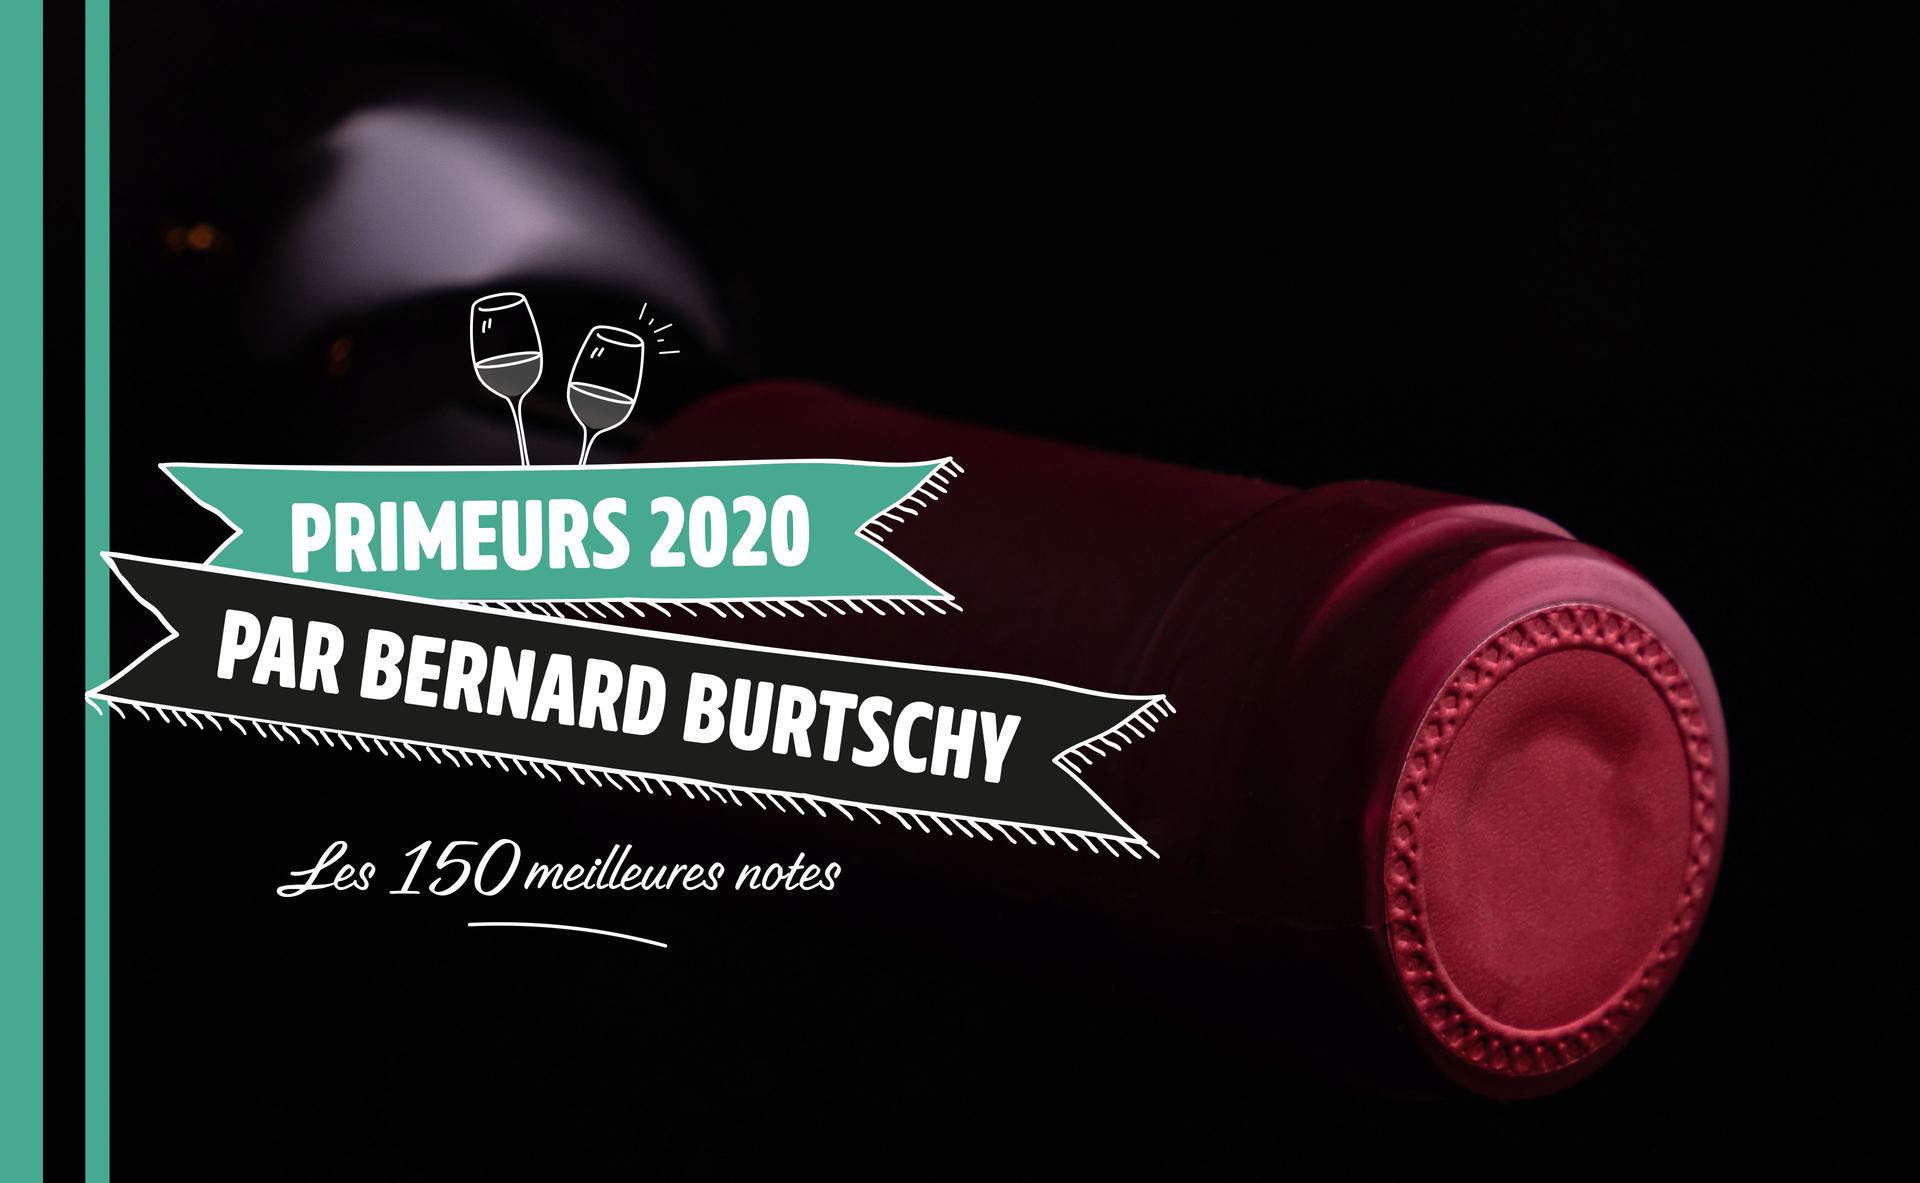 Primeurs 2020 par Bernard Burtschy : les 150 meilleures notes